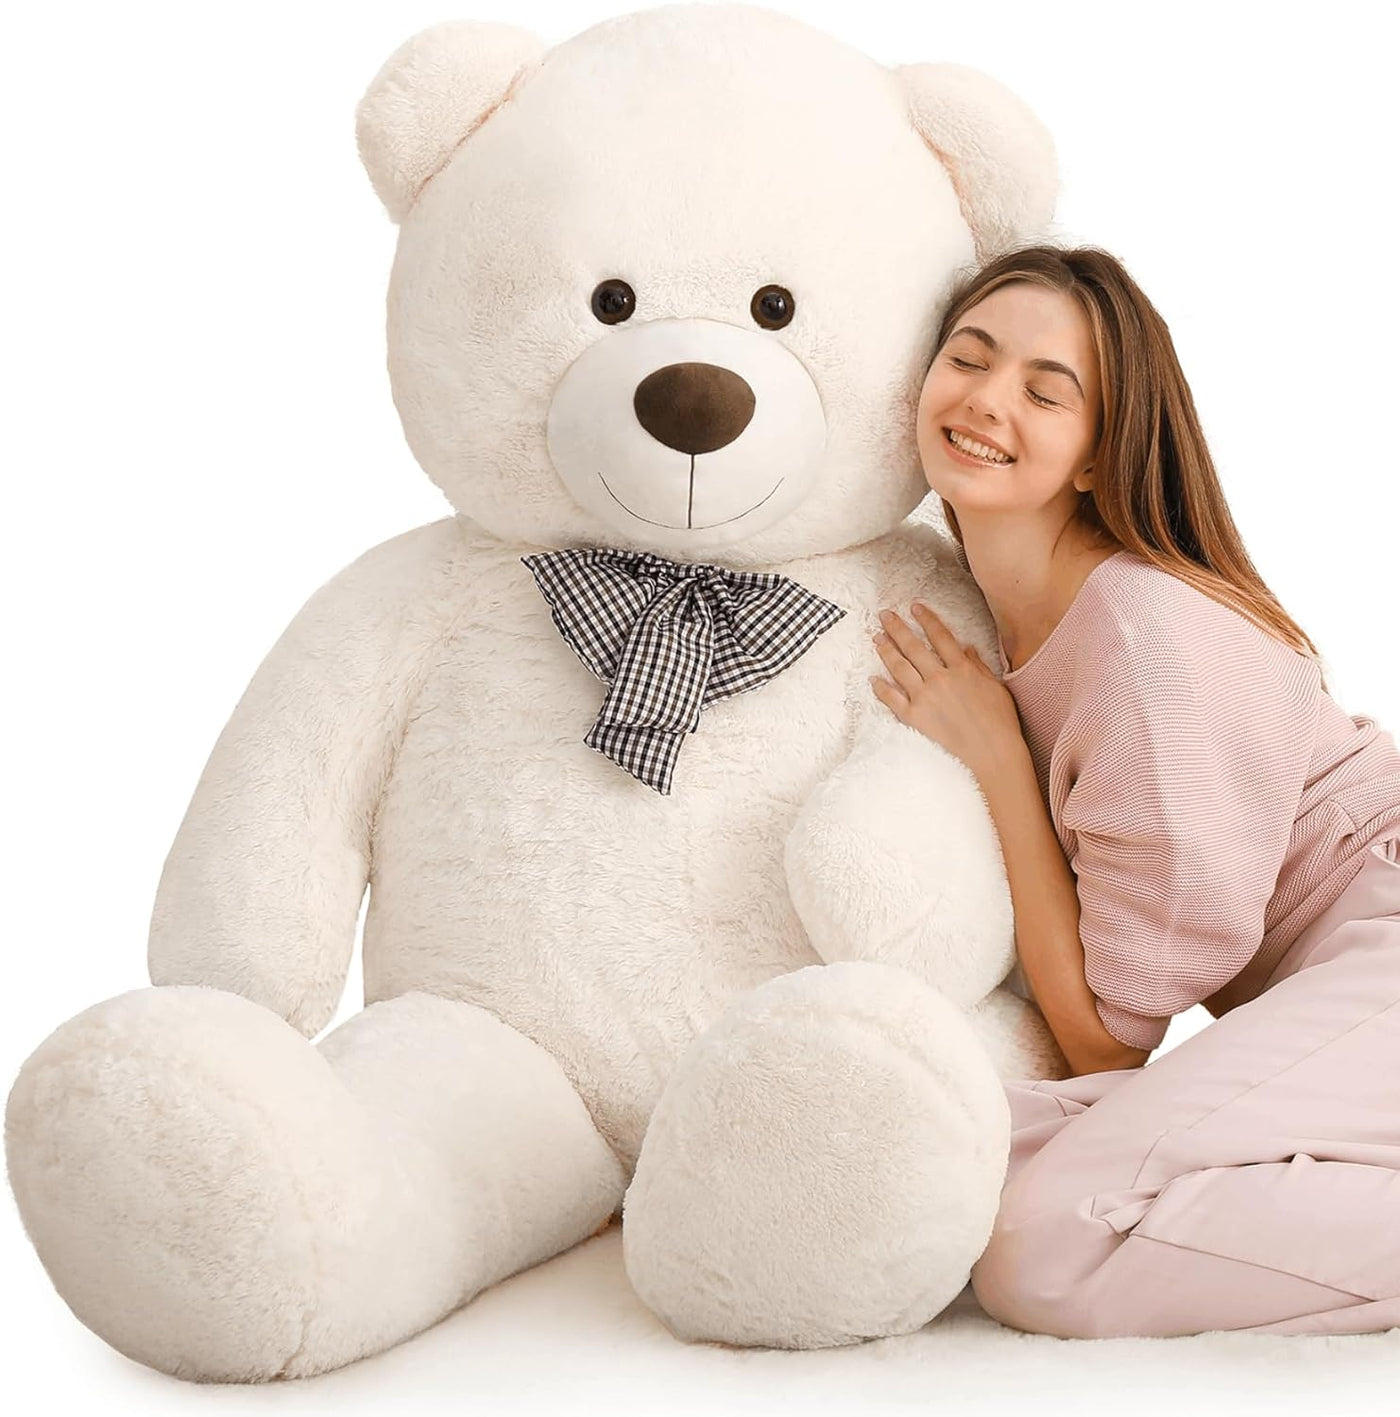 Giant Teddy Bear Stuffed Animal Toy, Beige, 59 Inches - MorisMos Plush Toys